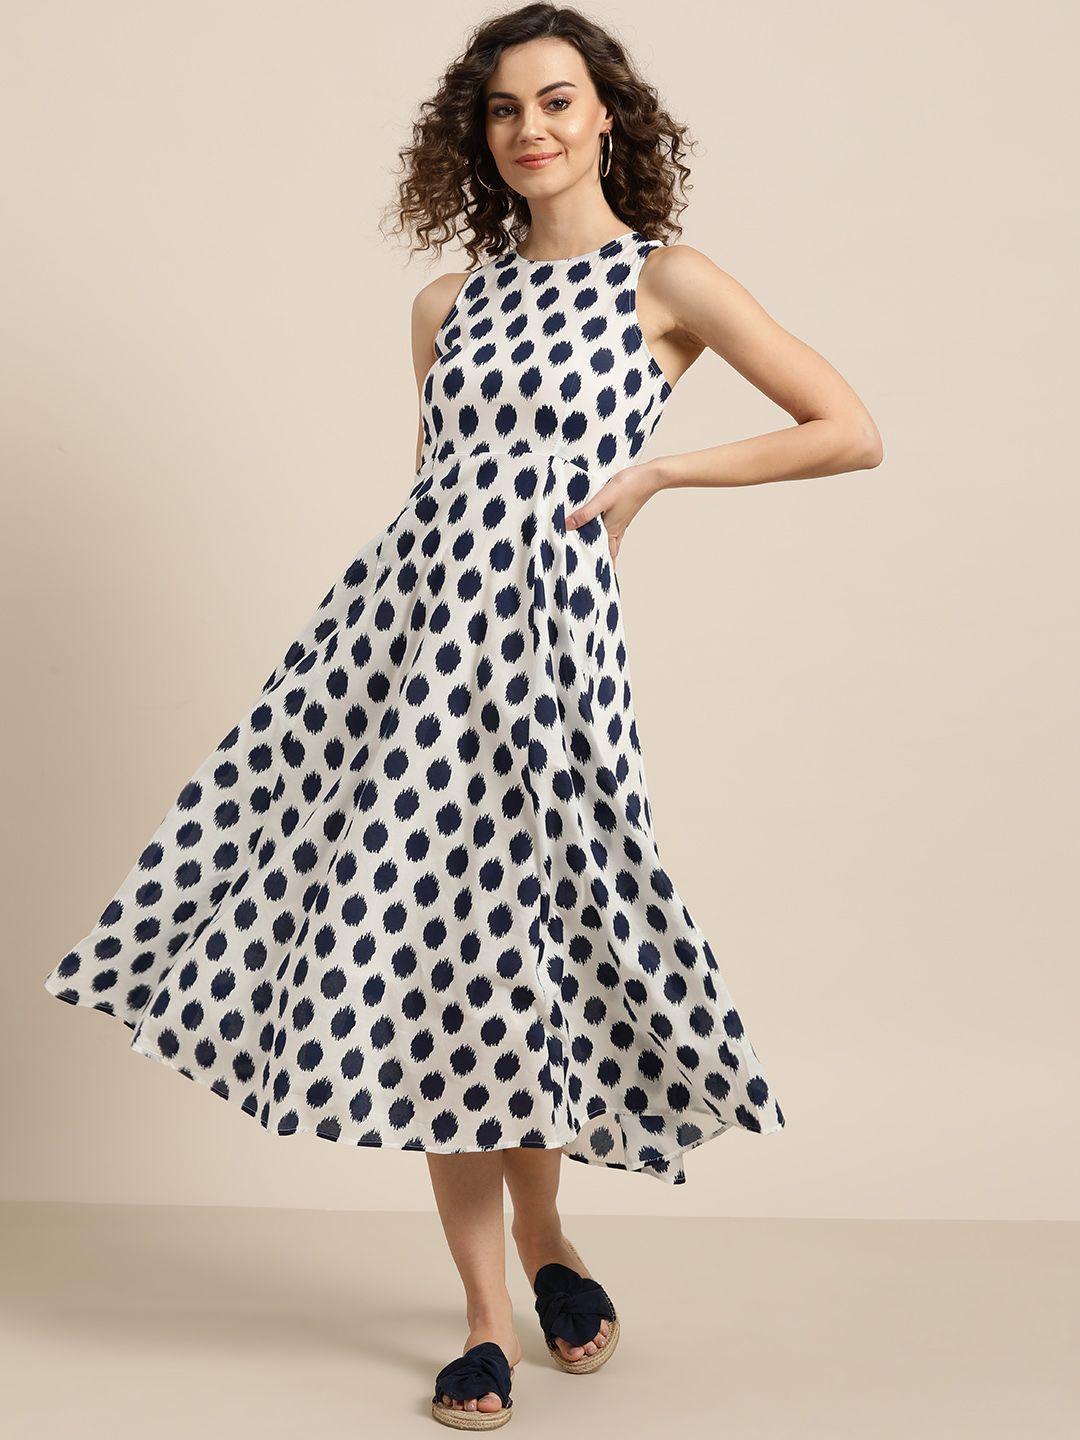 shae by sassafras women white & navy blue printed fit & flare dress